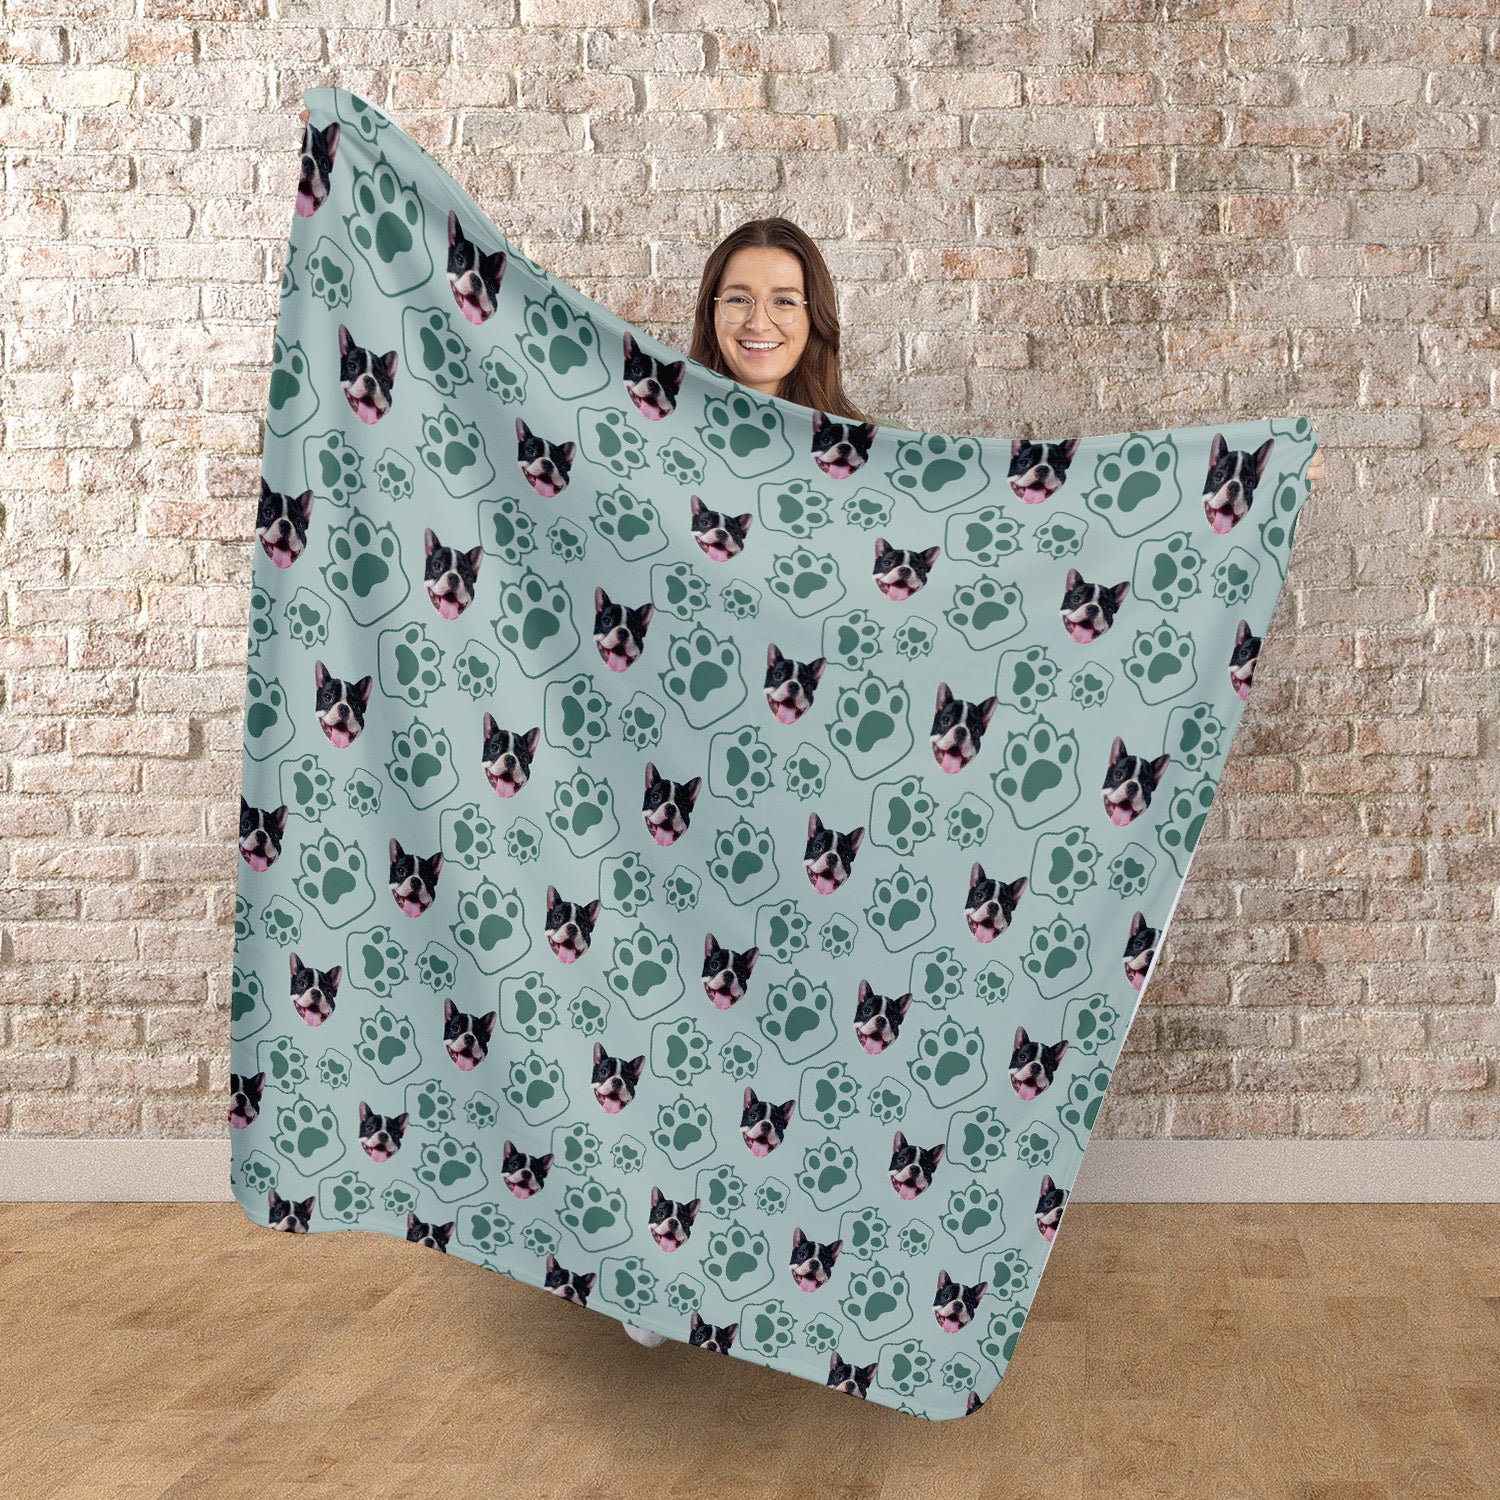 Pet Face Pattern - Minty Paws Print - Fleece Blanket 150cm x 150cm